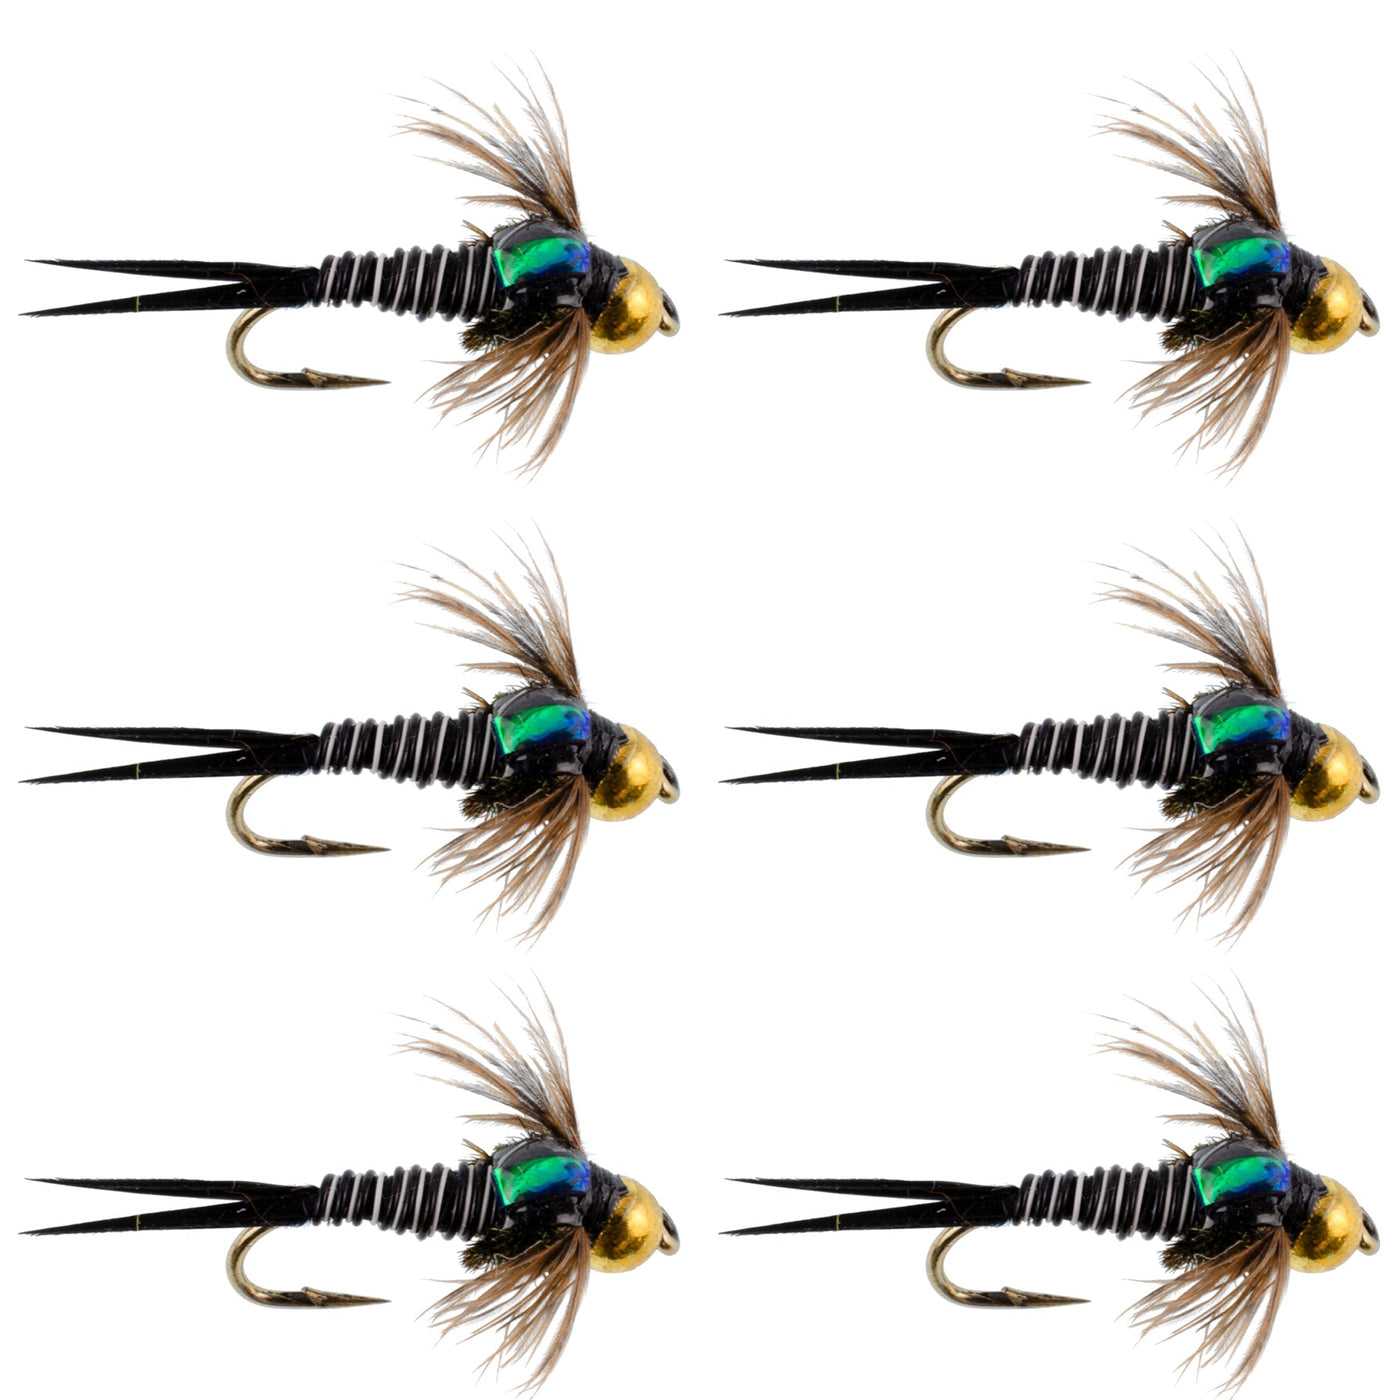 Bead Head Zebra Copper John Nymph Fly Fishing Flies - Set of 6 Flies H –  Wasatch Tenkara Rods